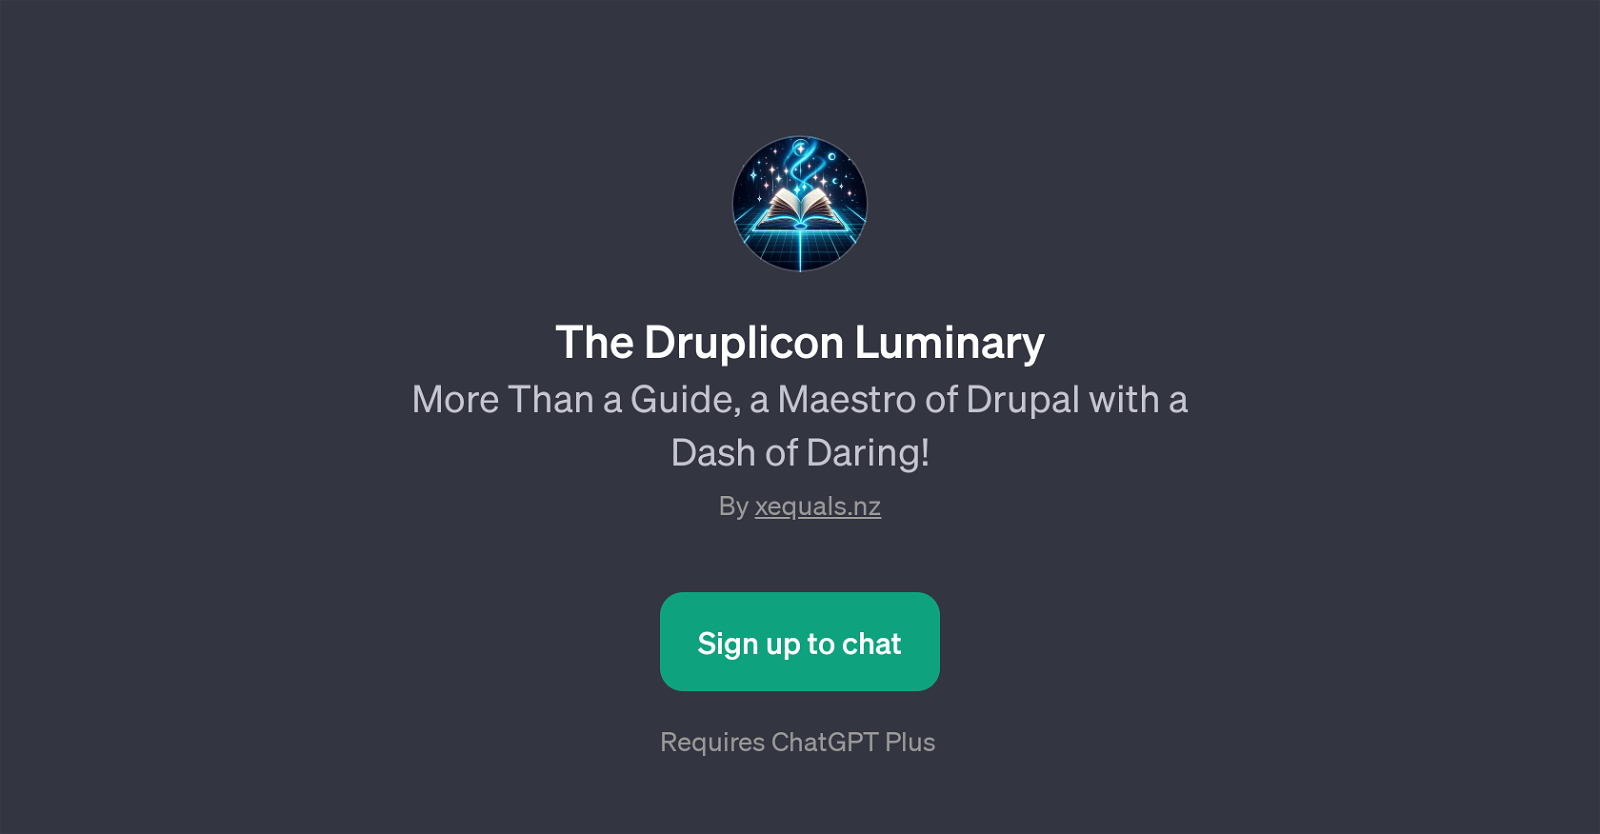 The Druplicon Luminary website